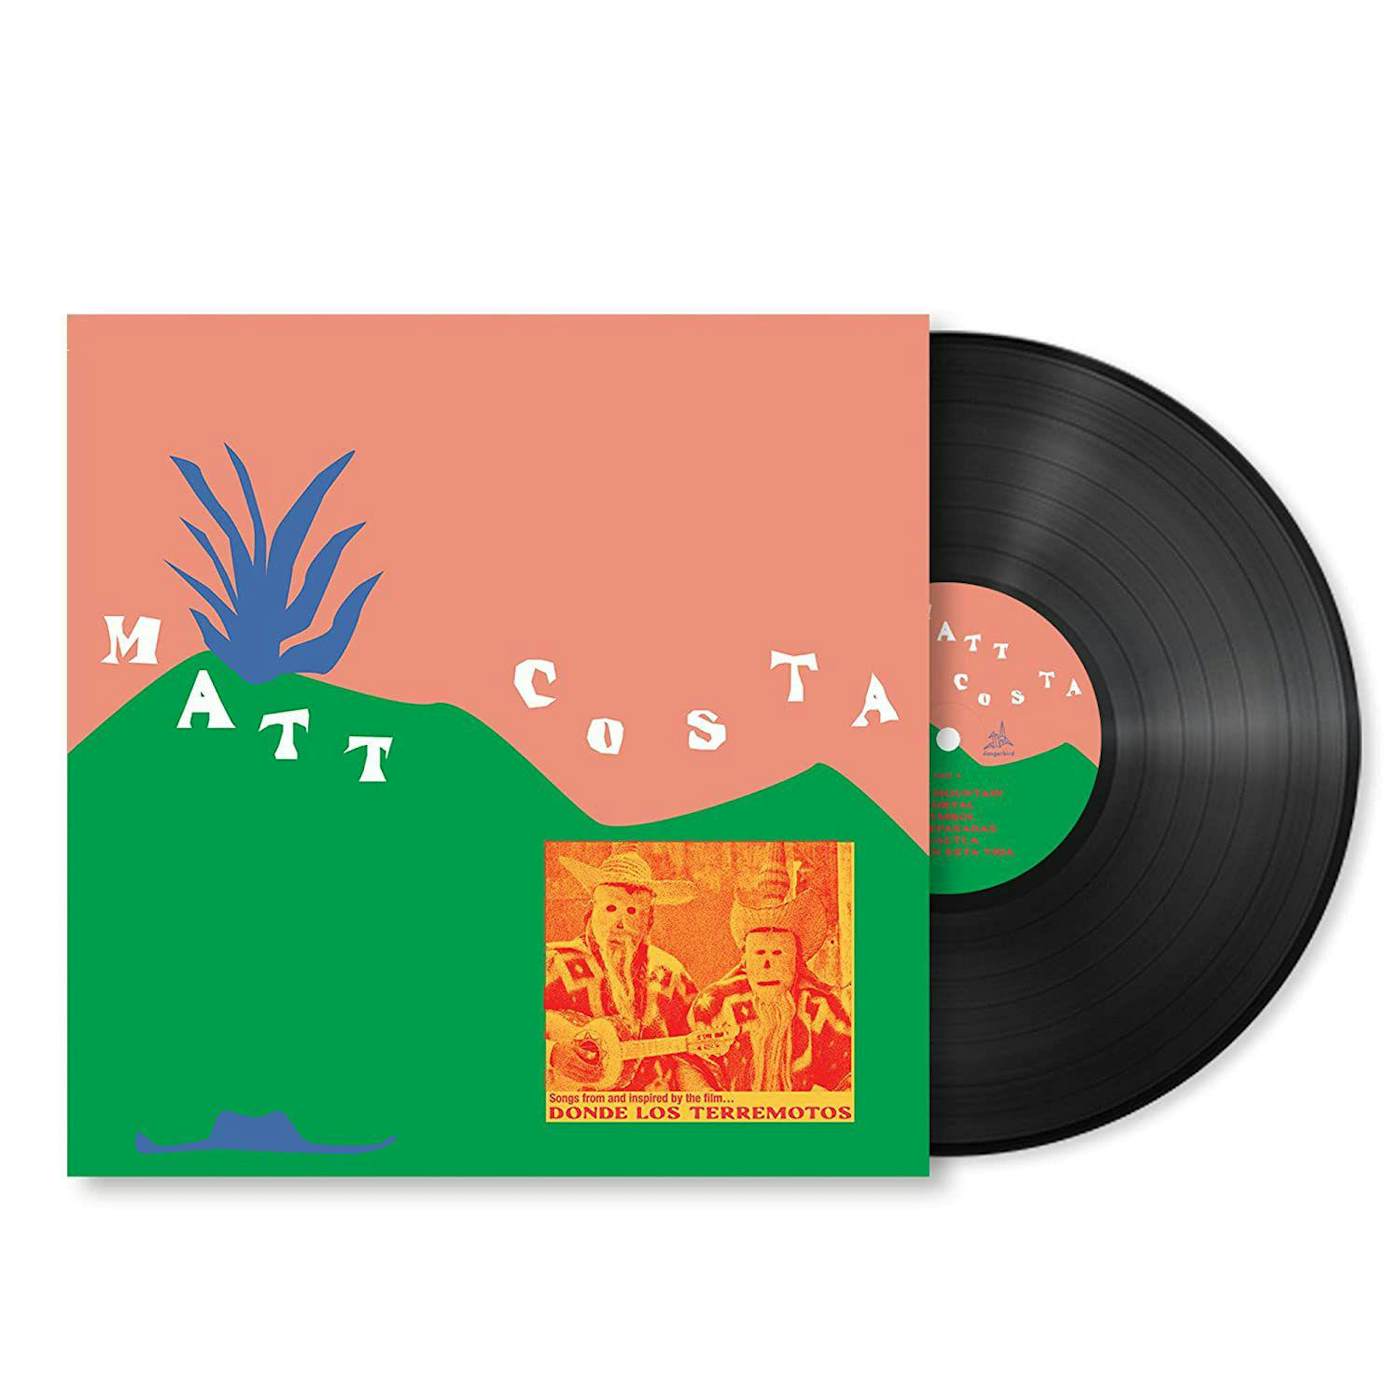 Matt Costa Donde Los Terremotos: Songs From & Inspired By The Film Vinyl Record